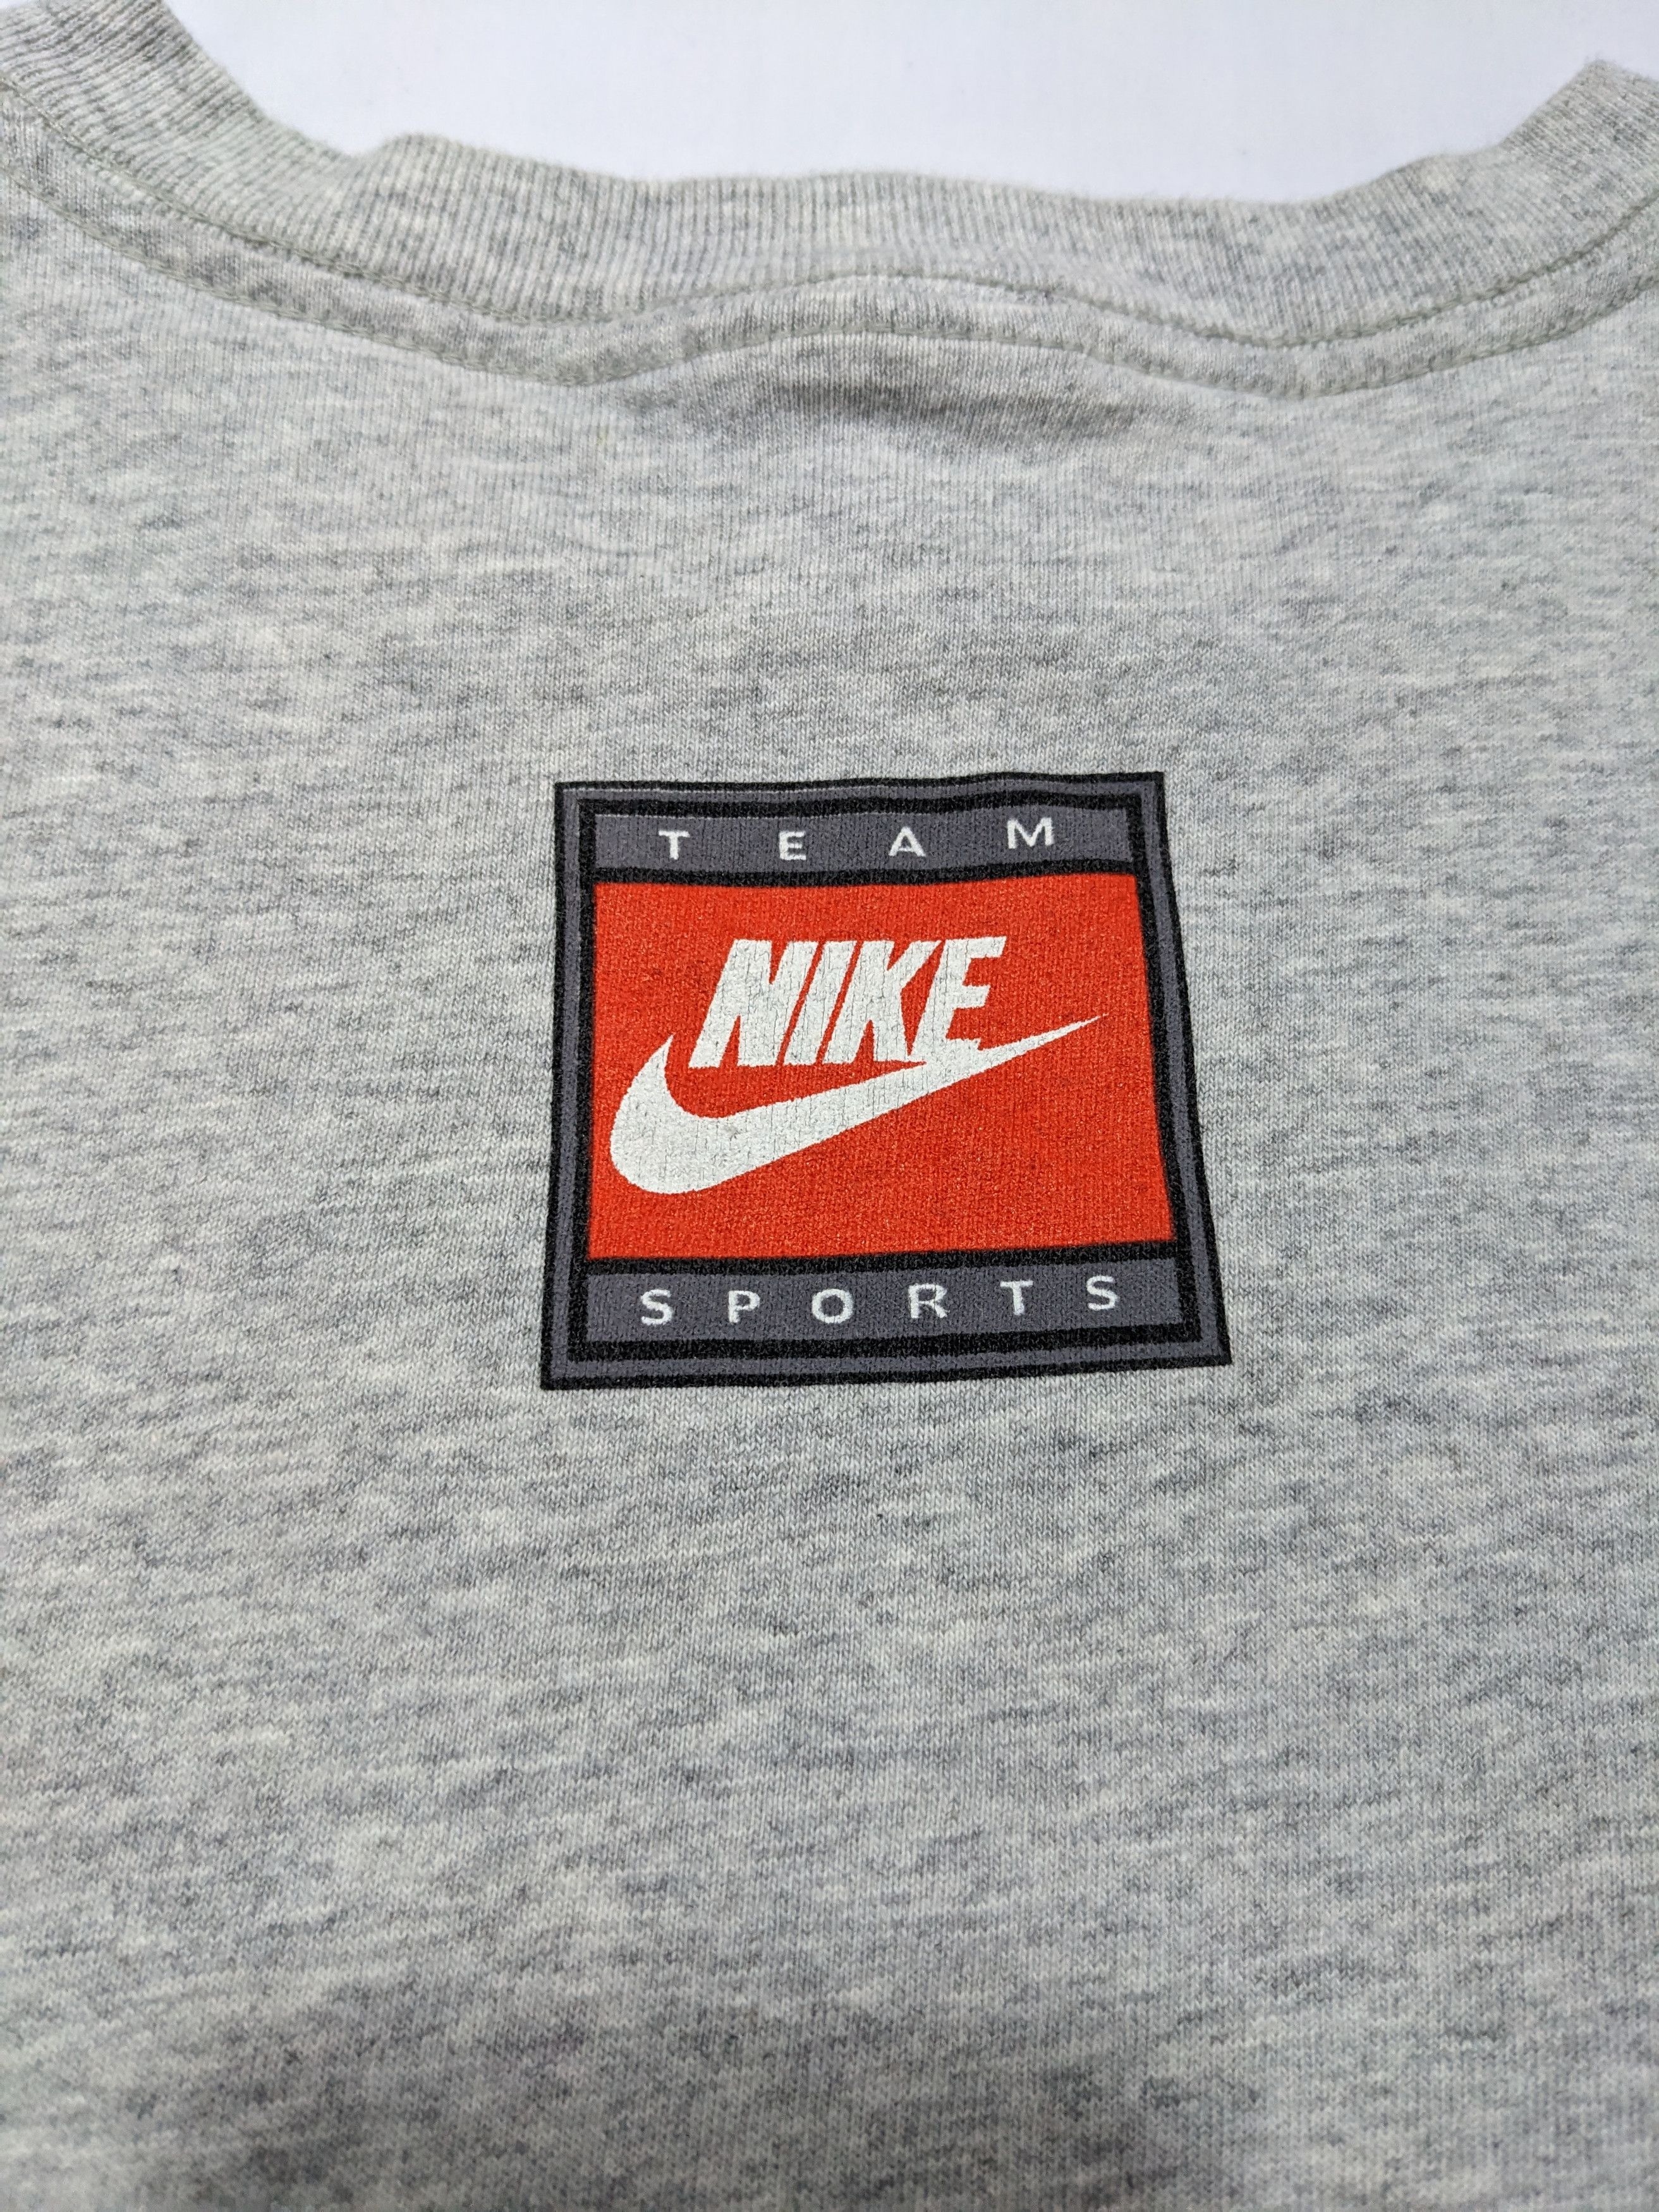 Vintage Nike USA 90s Jaguars Jacksonville NFL Gray T-shirt - 5